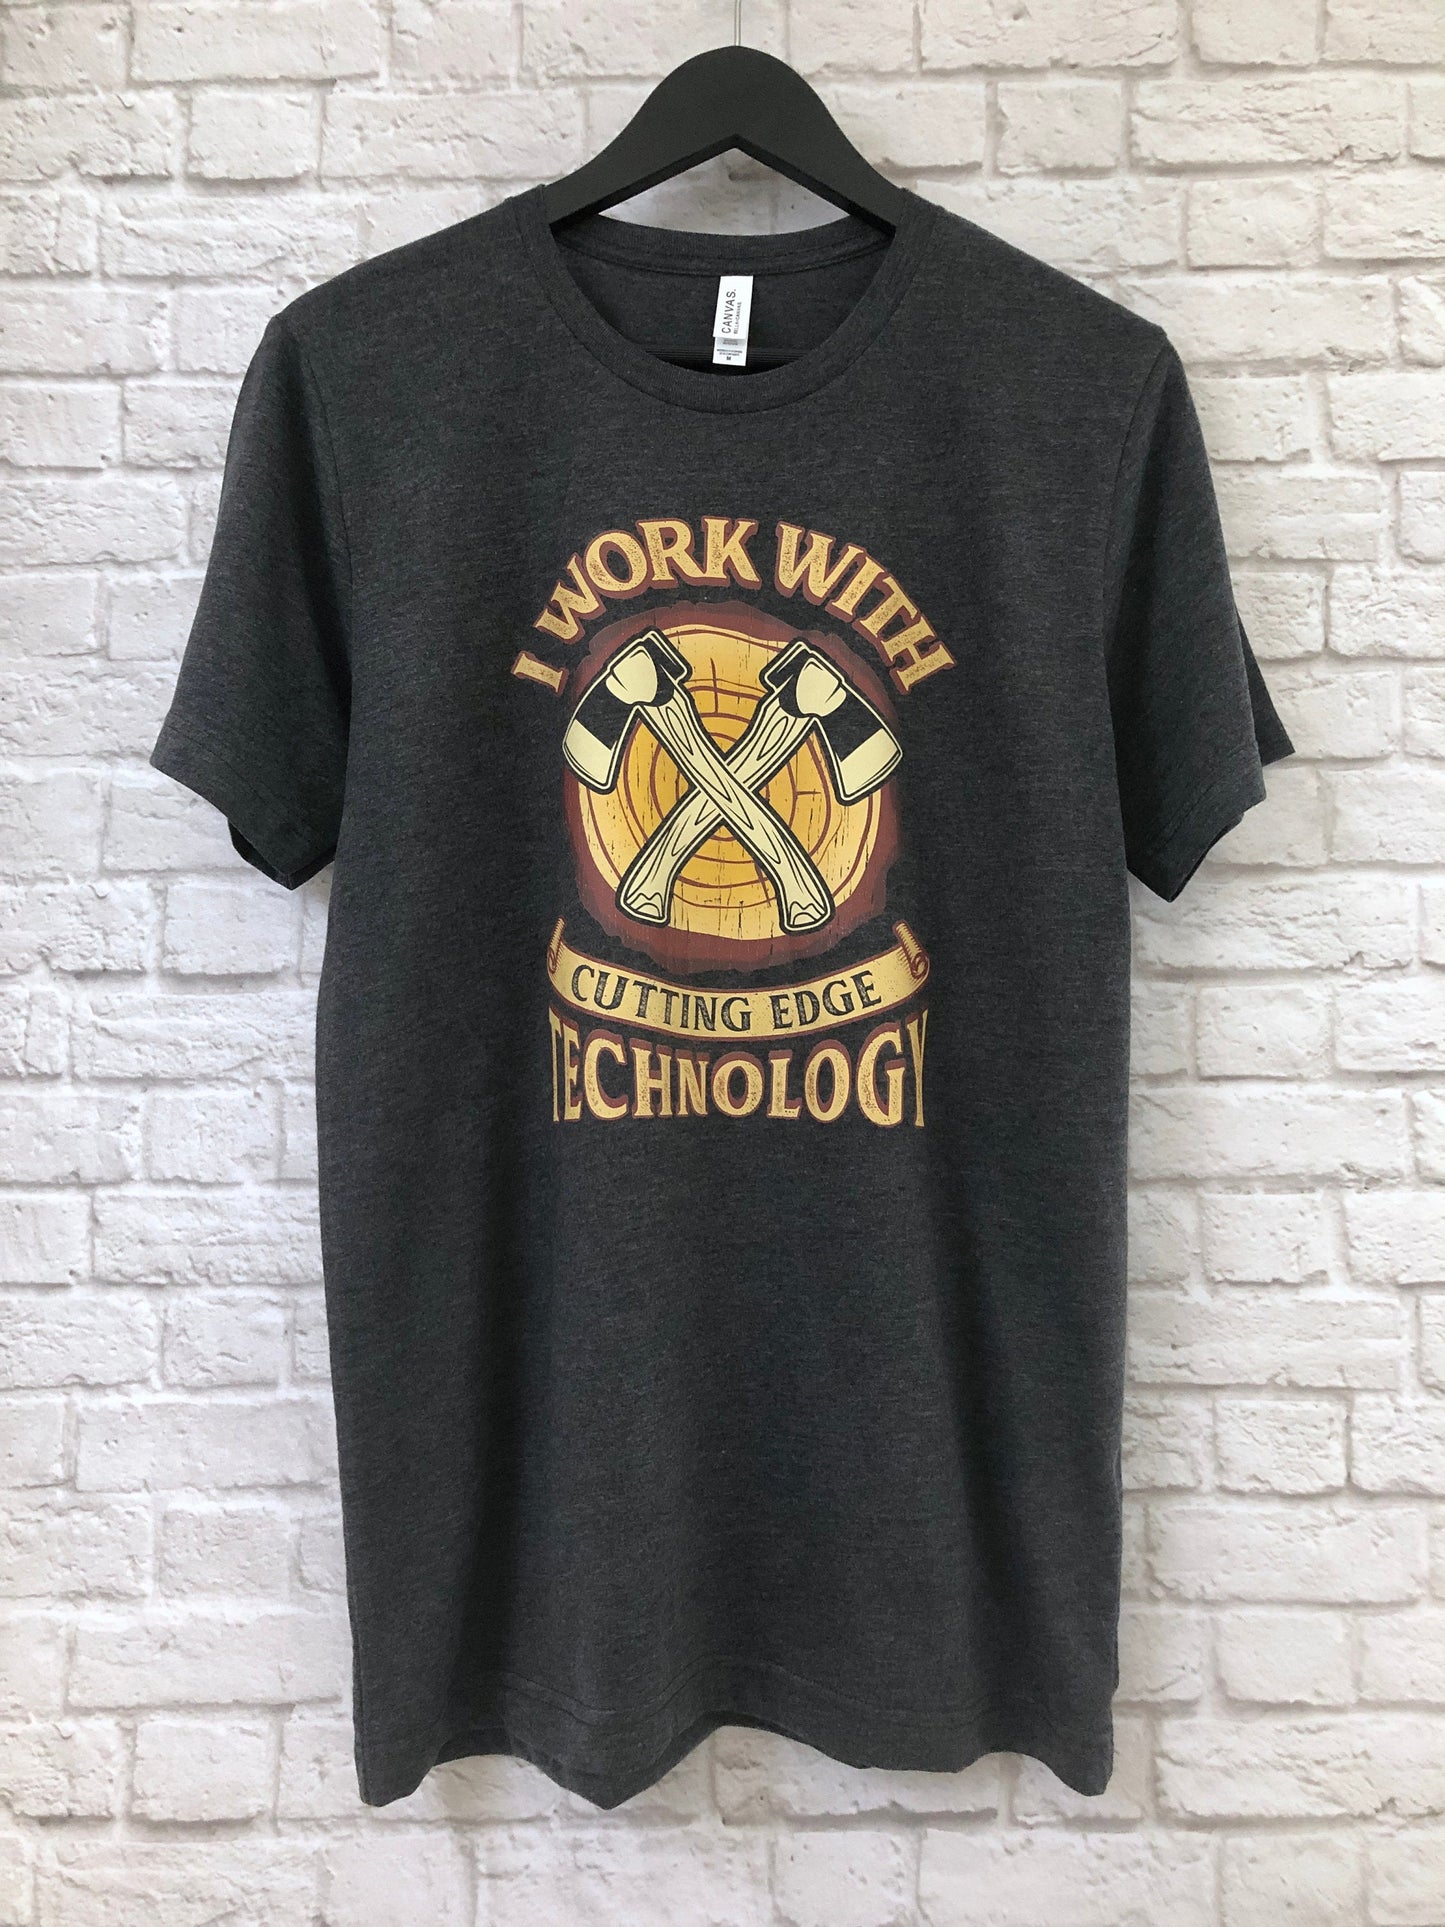 Funny Lumberjack Woodwork T-Shirt, I Work With Cutting Edge Technology Pun Gift Idea, Humorous Arborist Axes Graphic Print Tee Shirt Top